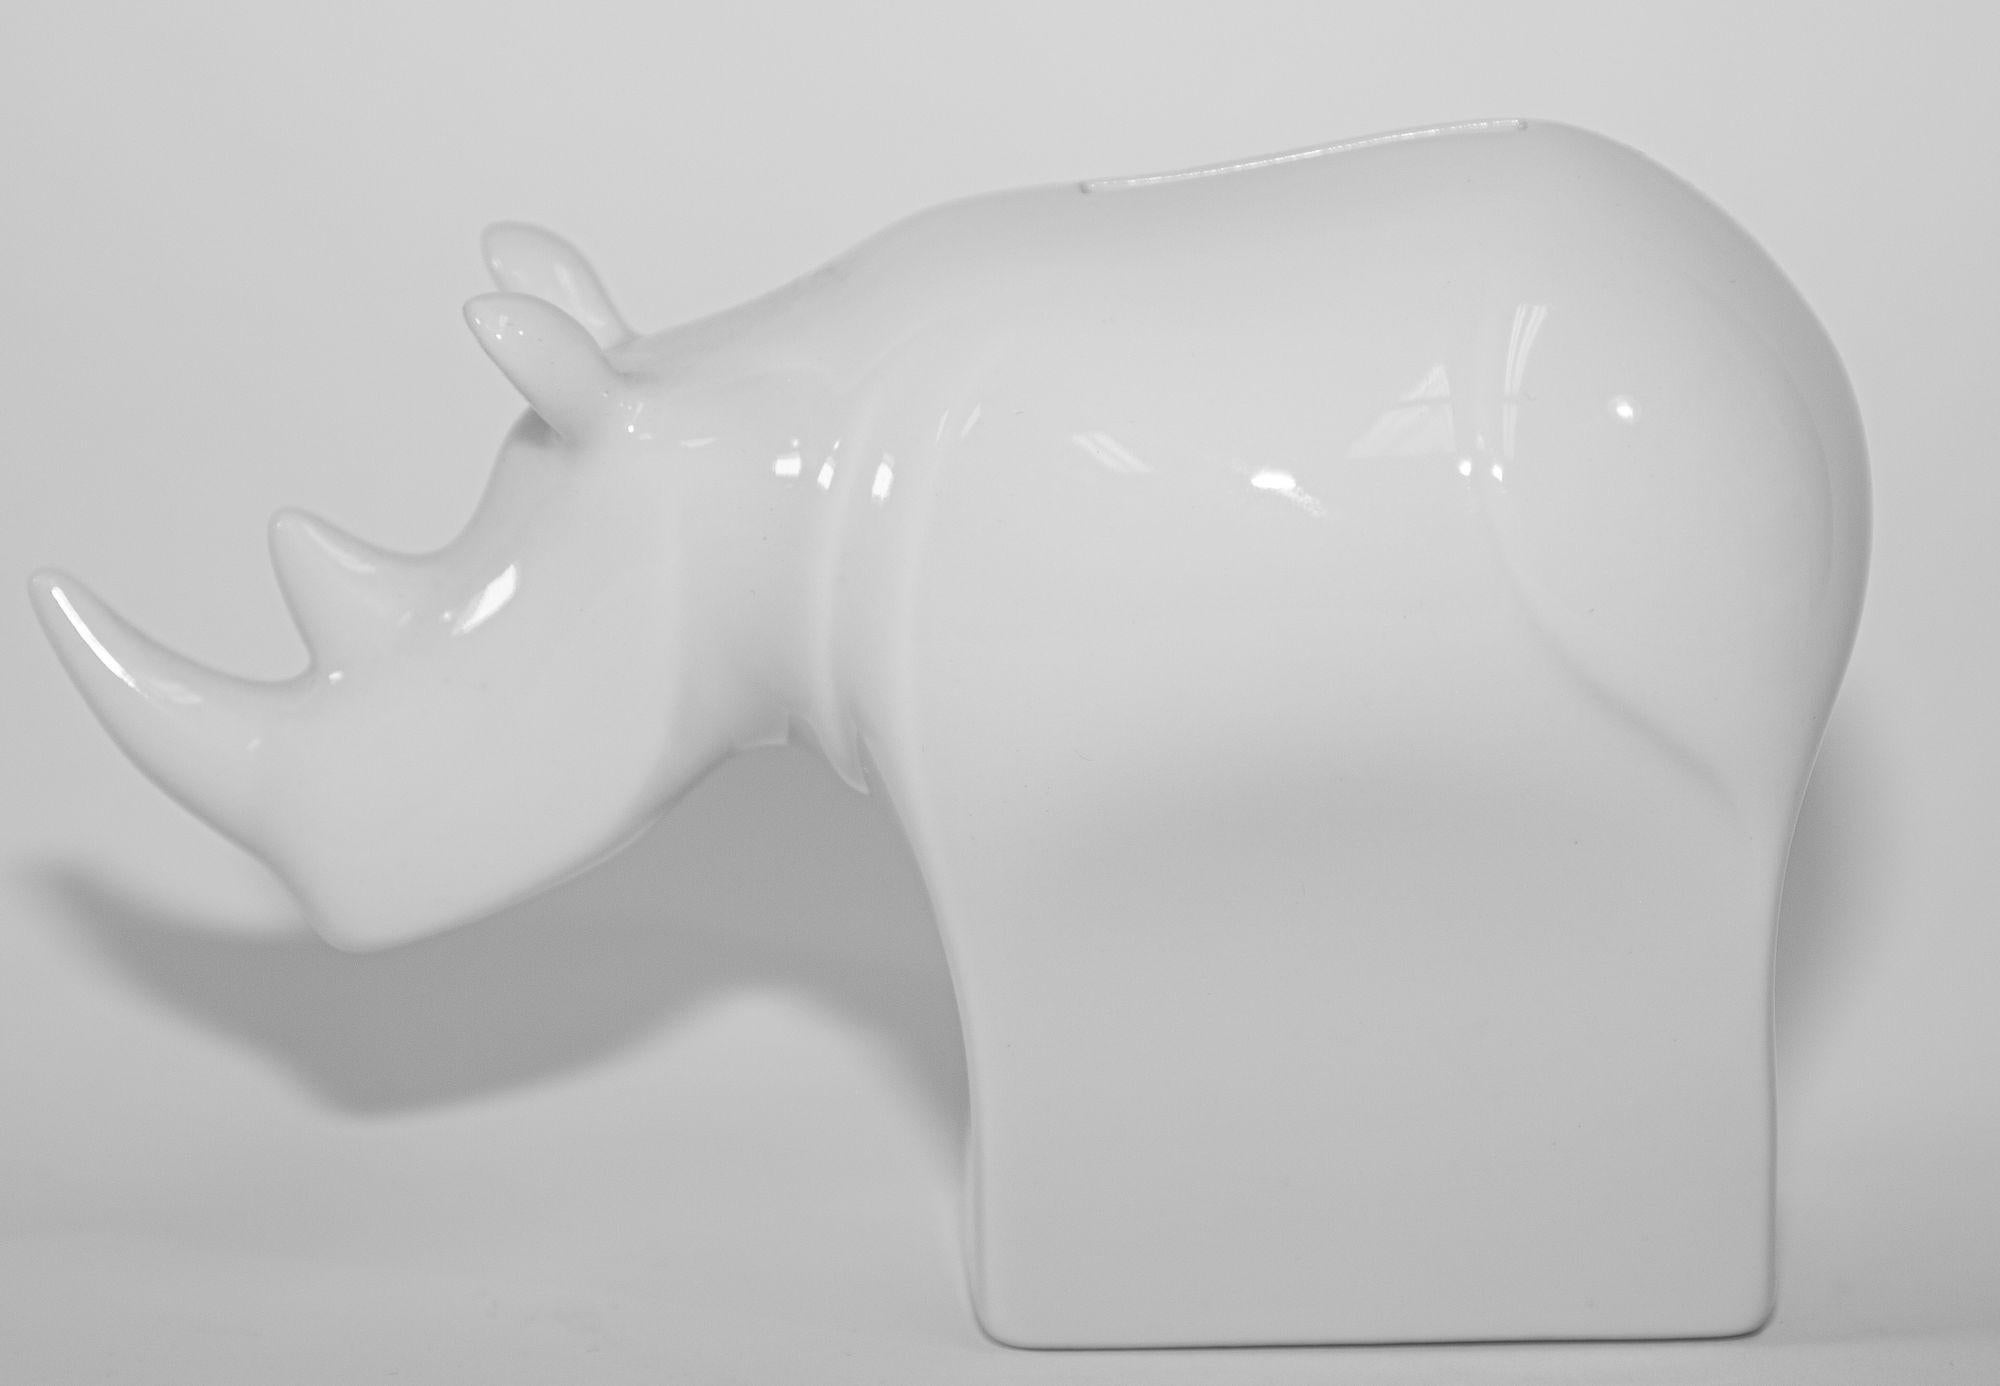 Vintage Dansk Rhinoceros white Porcelain ceramic Coin bank.
Sleek Dansk white Porcelain Rhinoceros Bank, Scandinavian style, Modernist.
Unique addition to your modern Scandinavian style home
Very sleek modern design.
Excellent condition, with